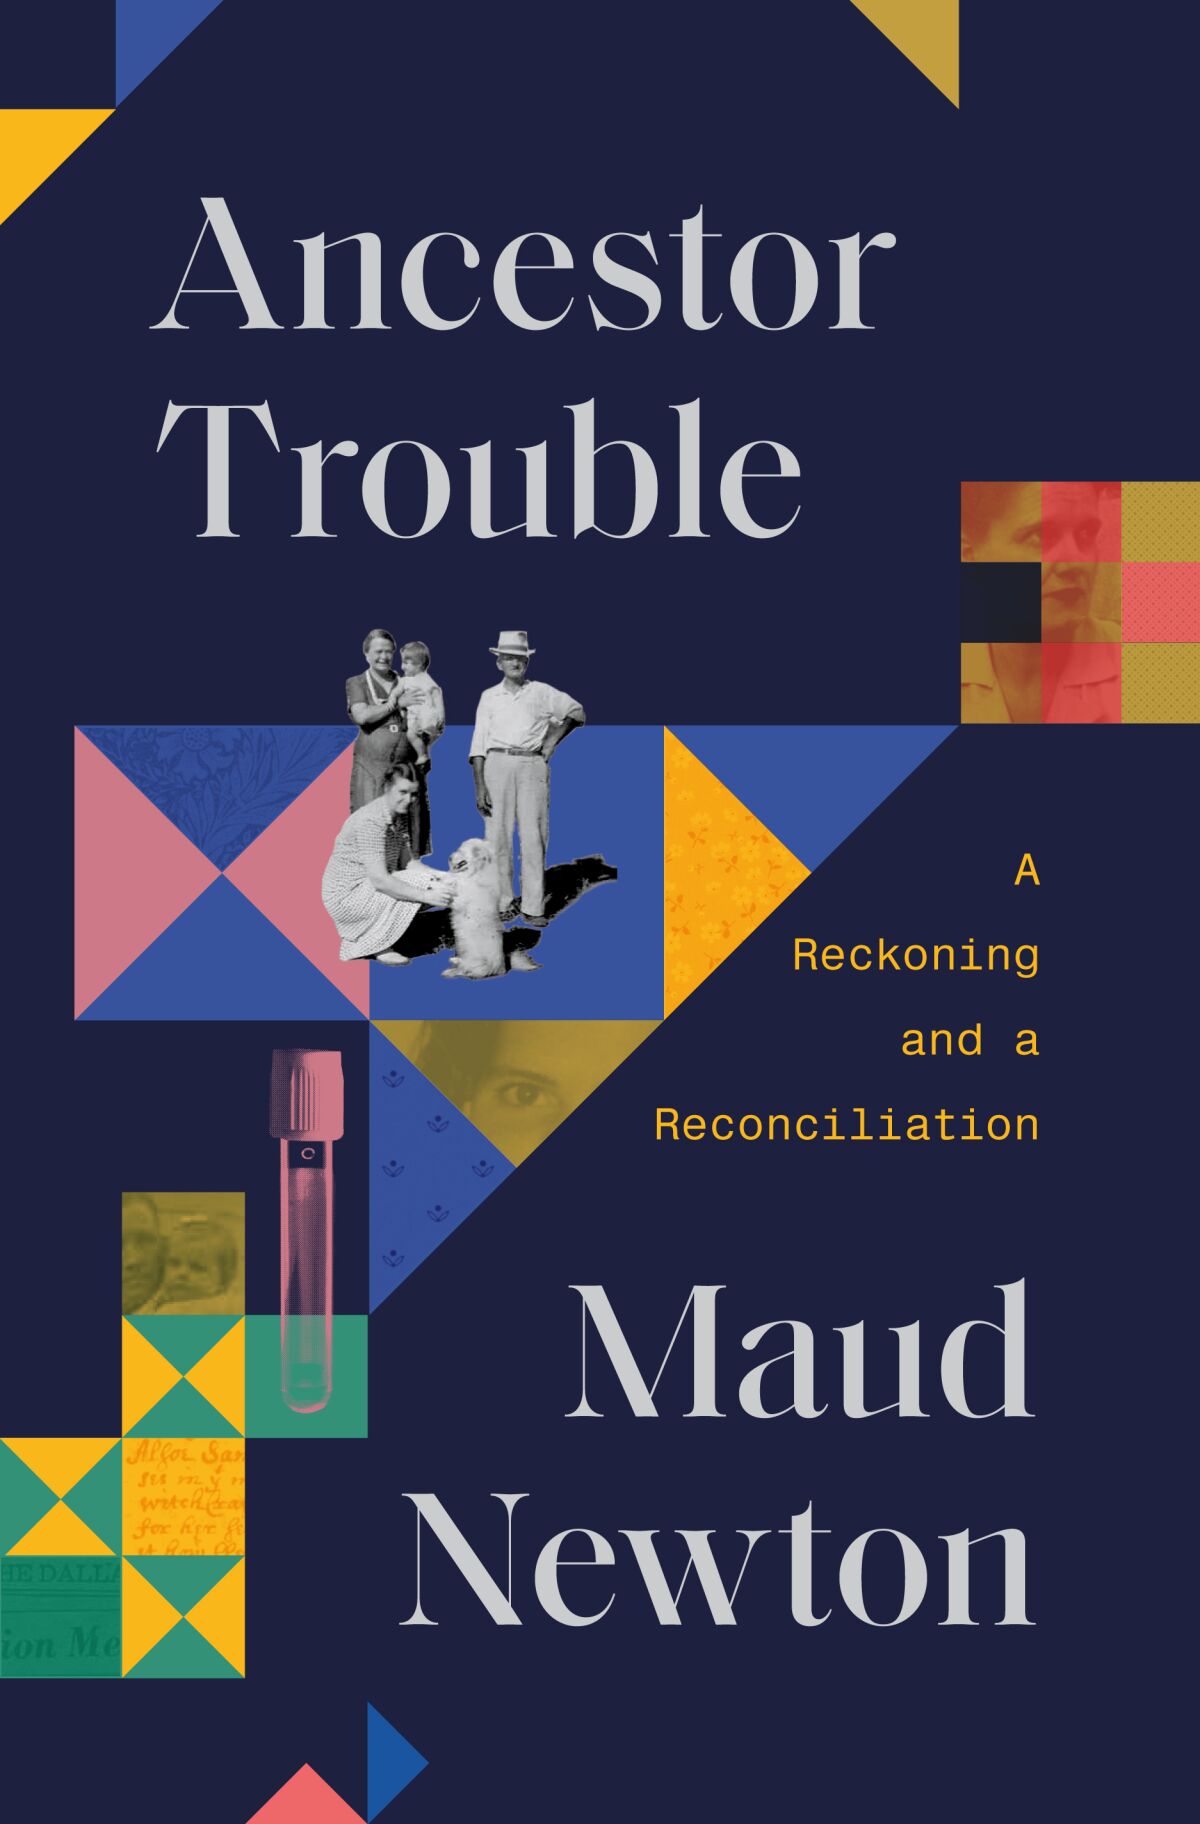 "Ancestor Trouble," by Maud Newton